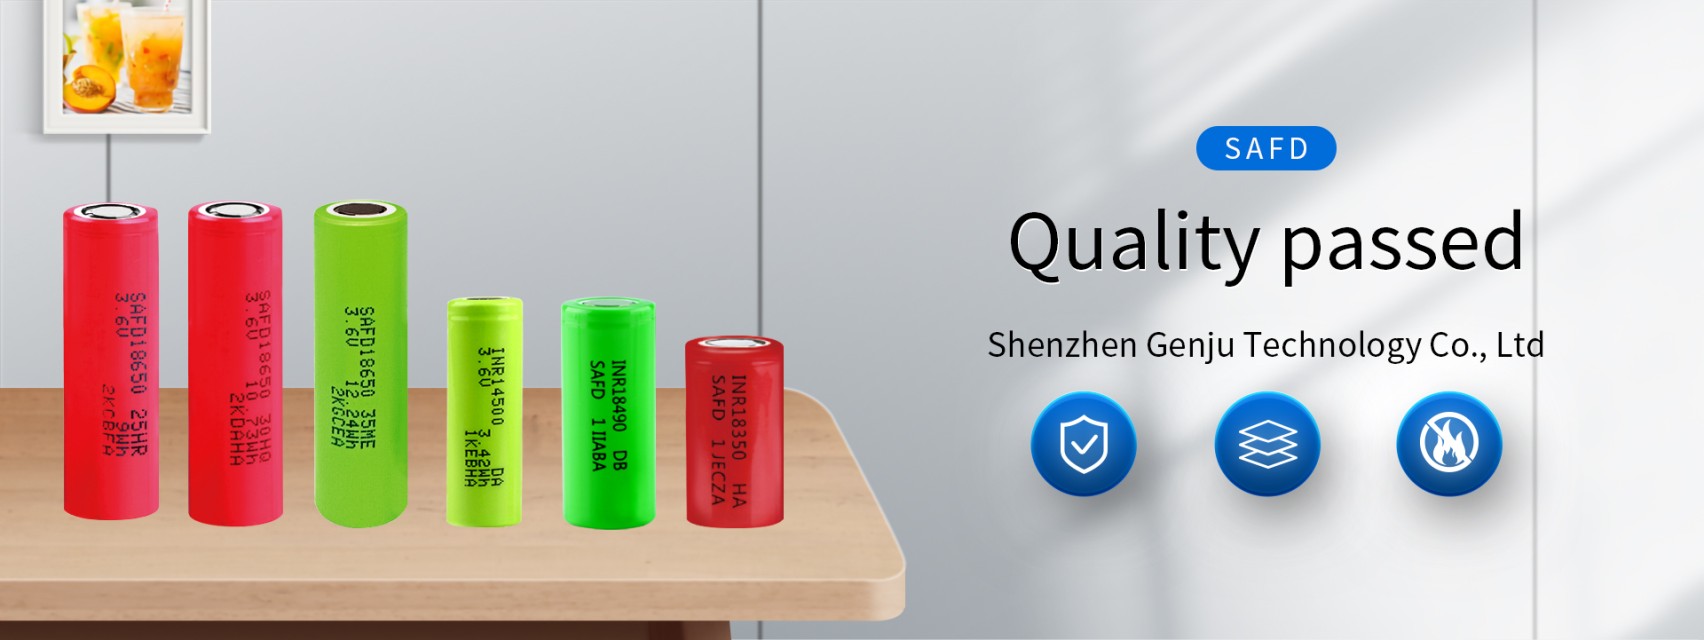 Shenzhen Genju Technology Co. Ltd